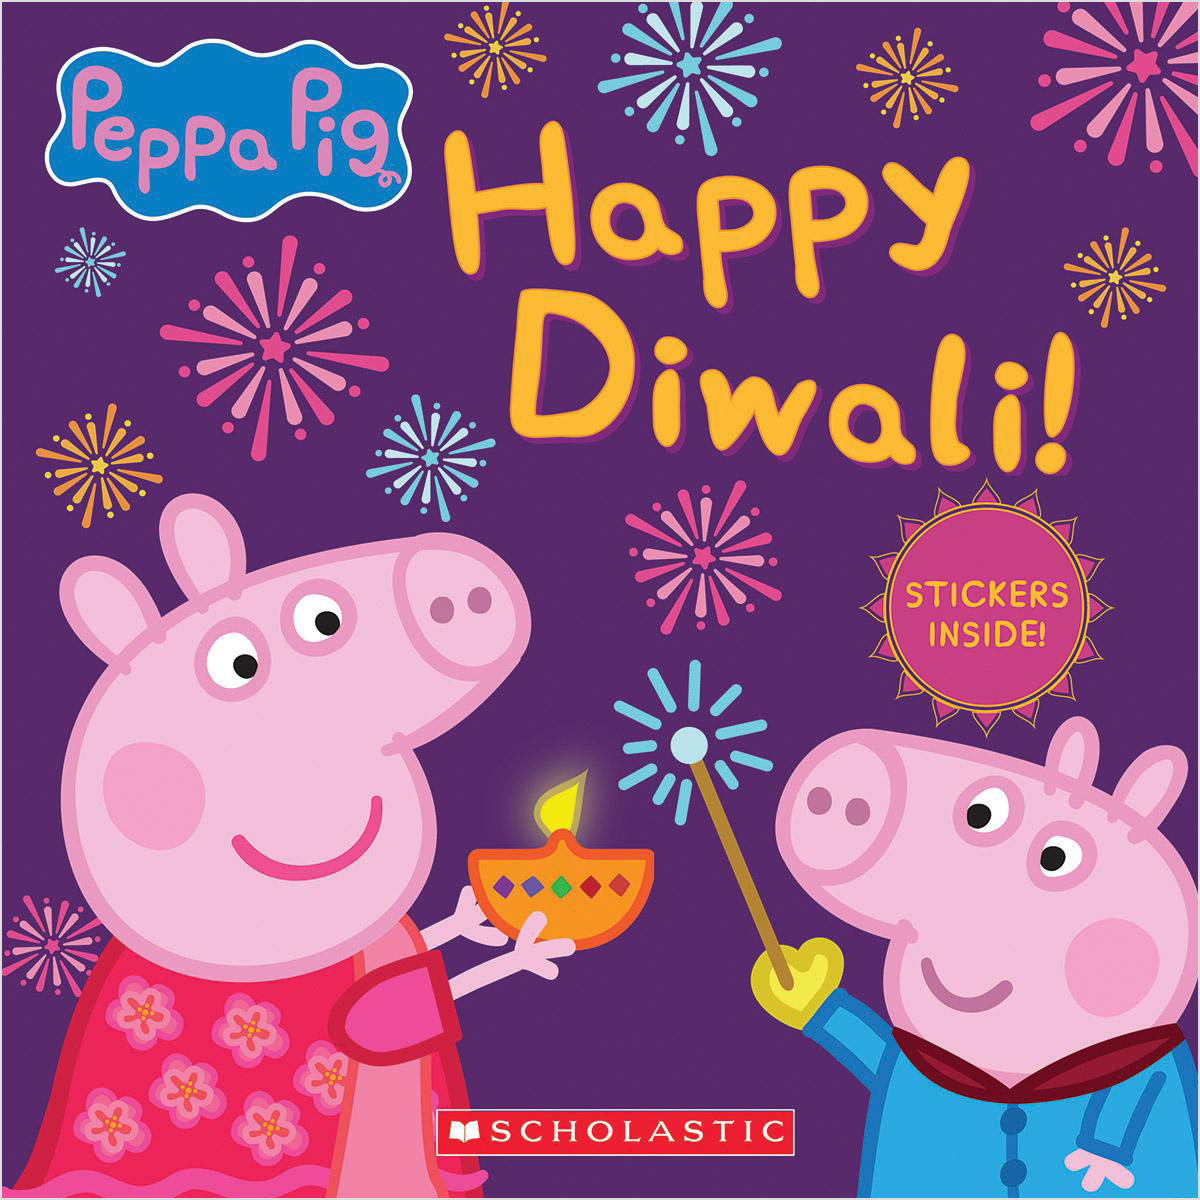  Peppa Pig: Happy Diwali! 